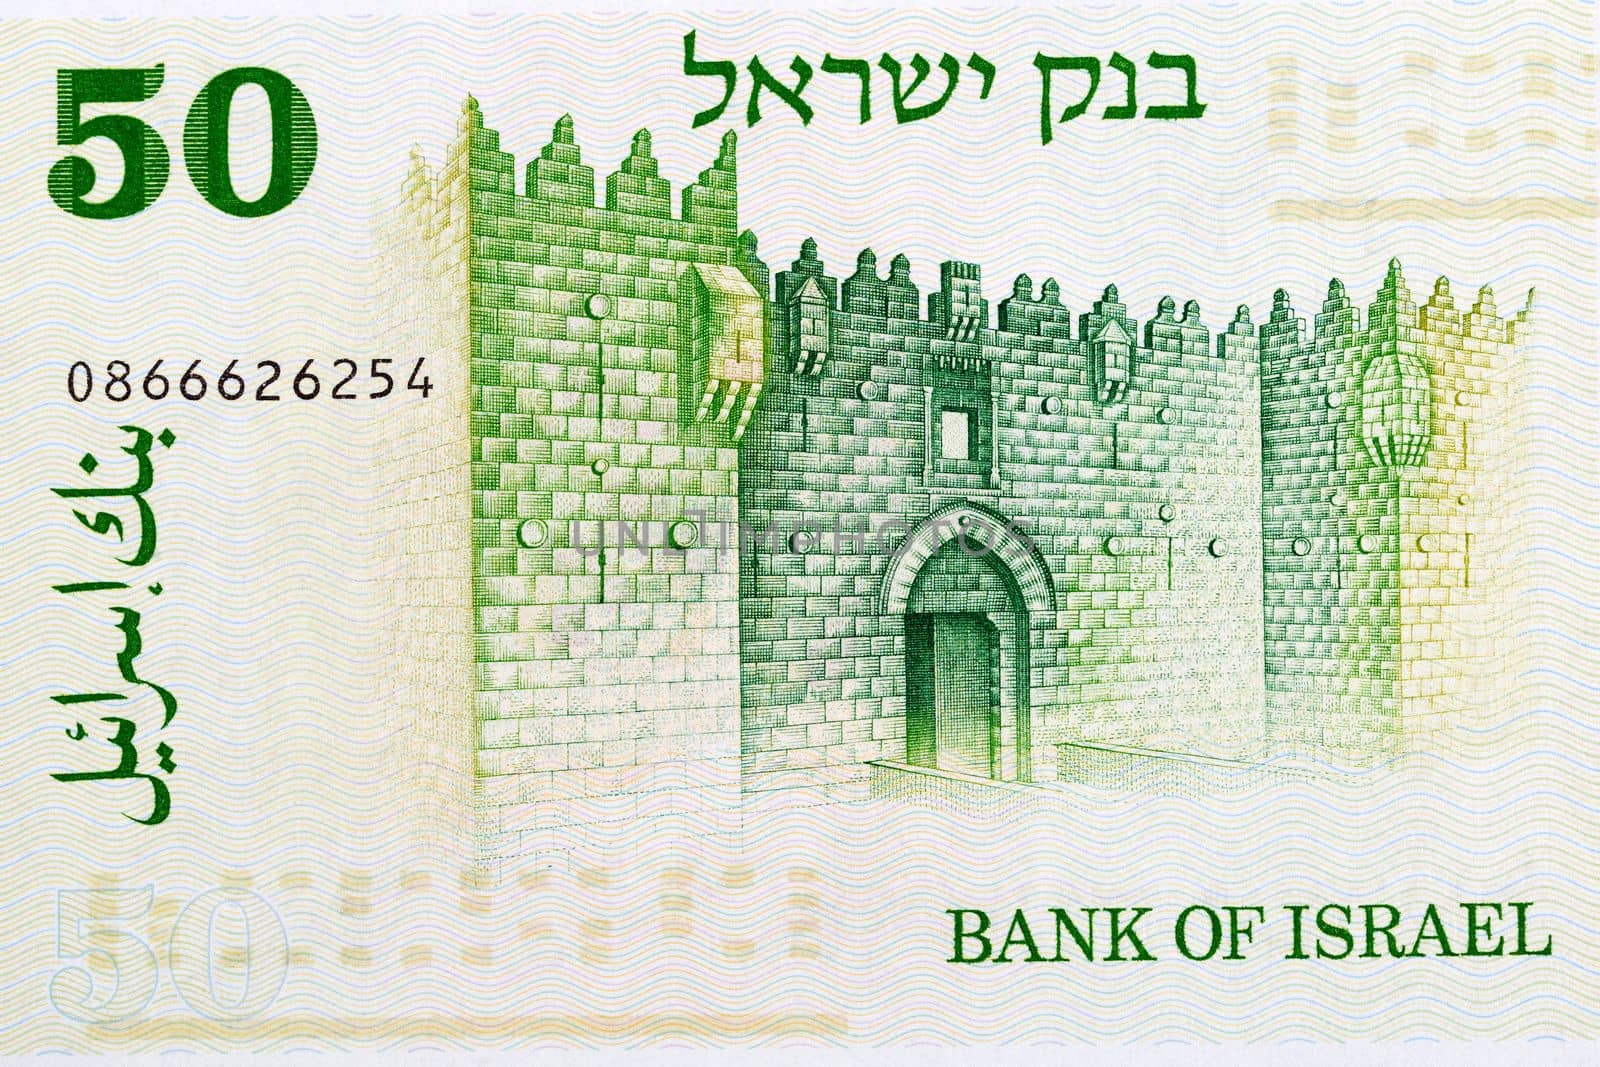 Sichem Gate from old Israeli money - Lirot